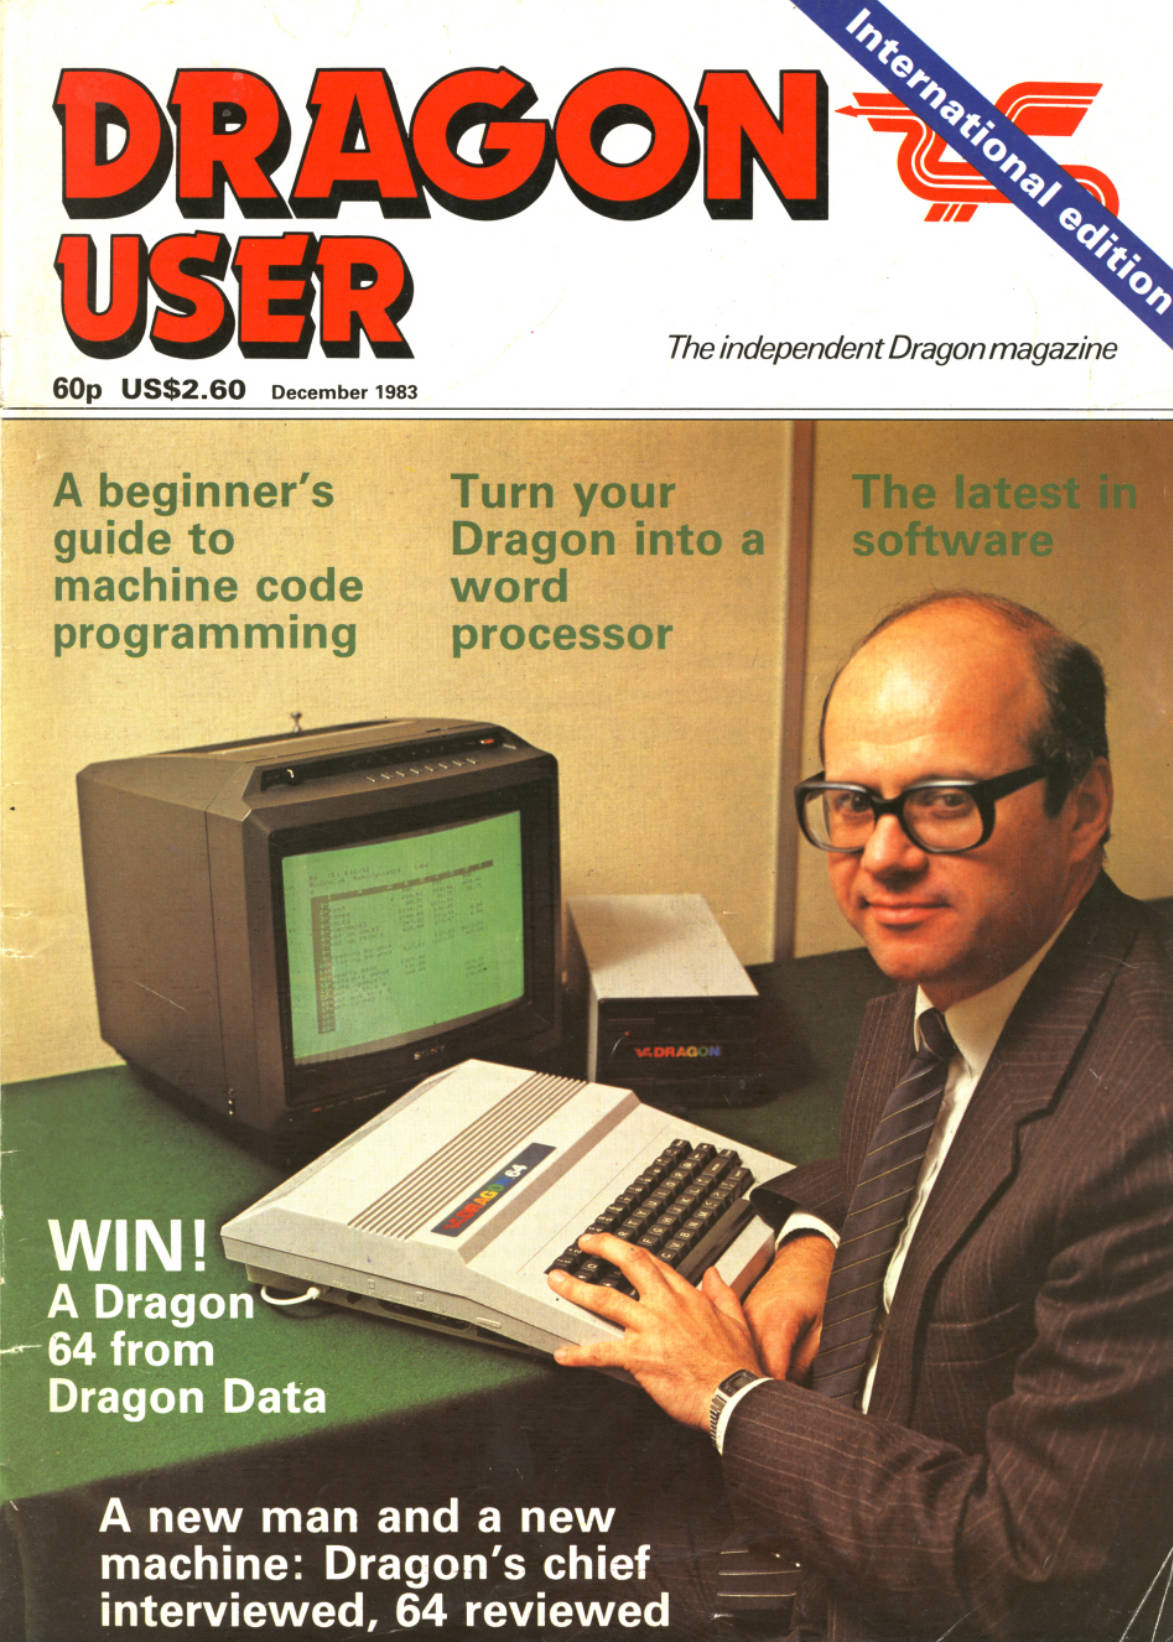 Dragon User December 1983 cover